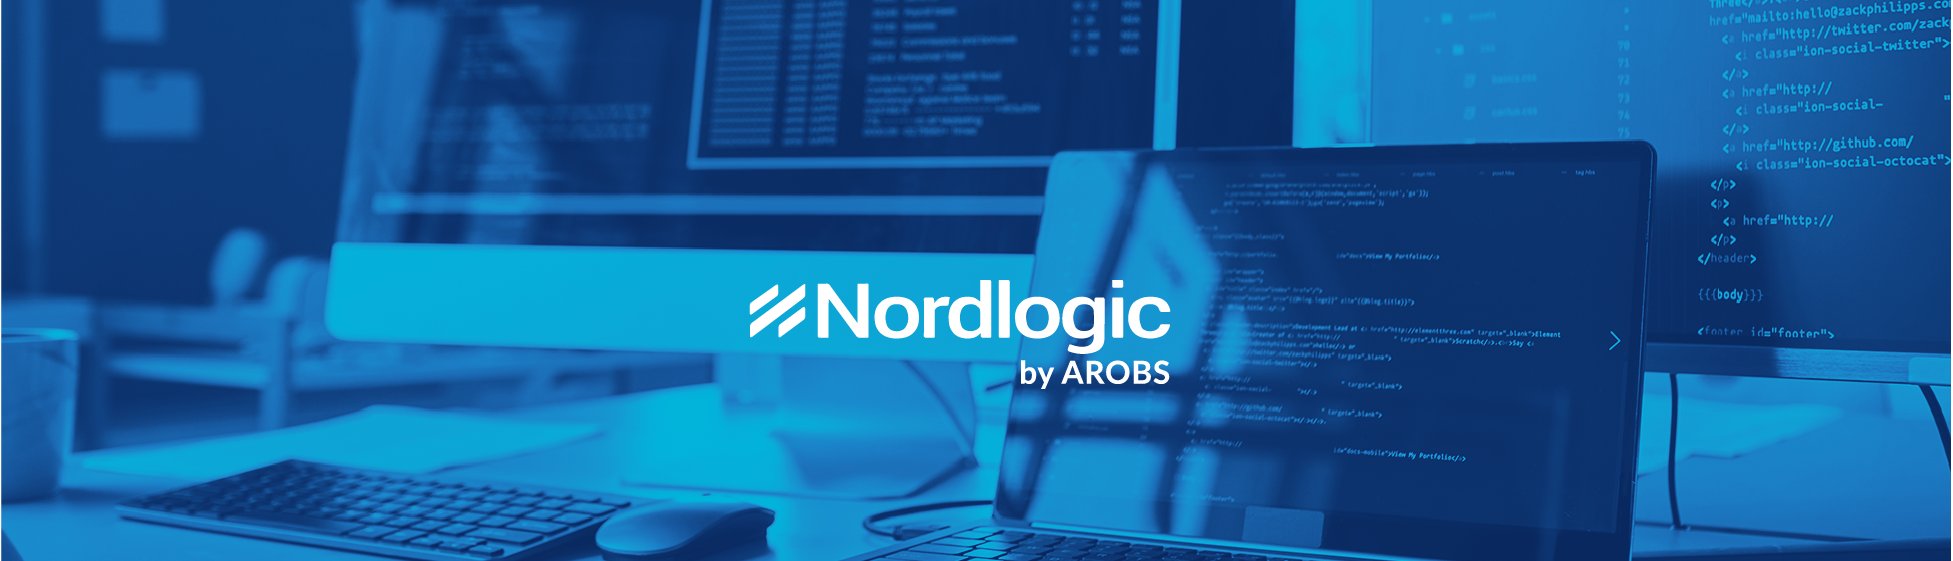 Nordlogic by AROBS